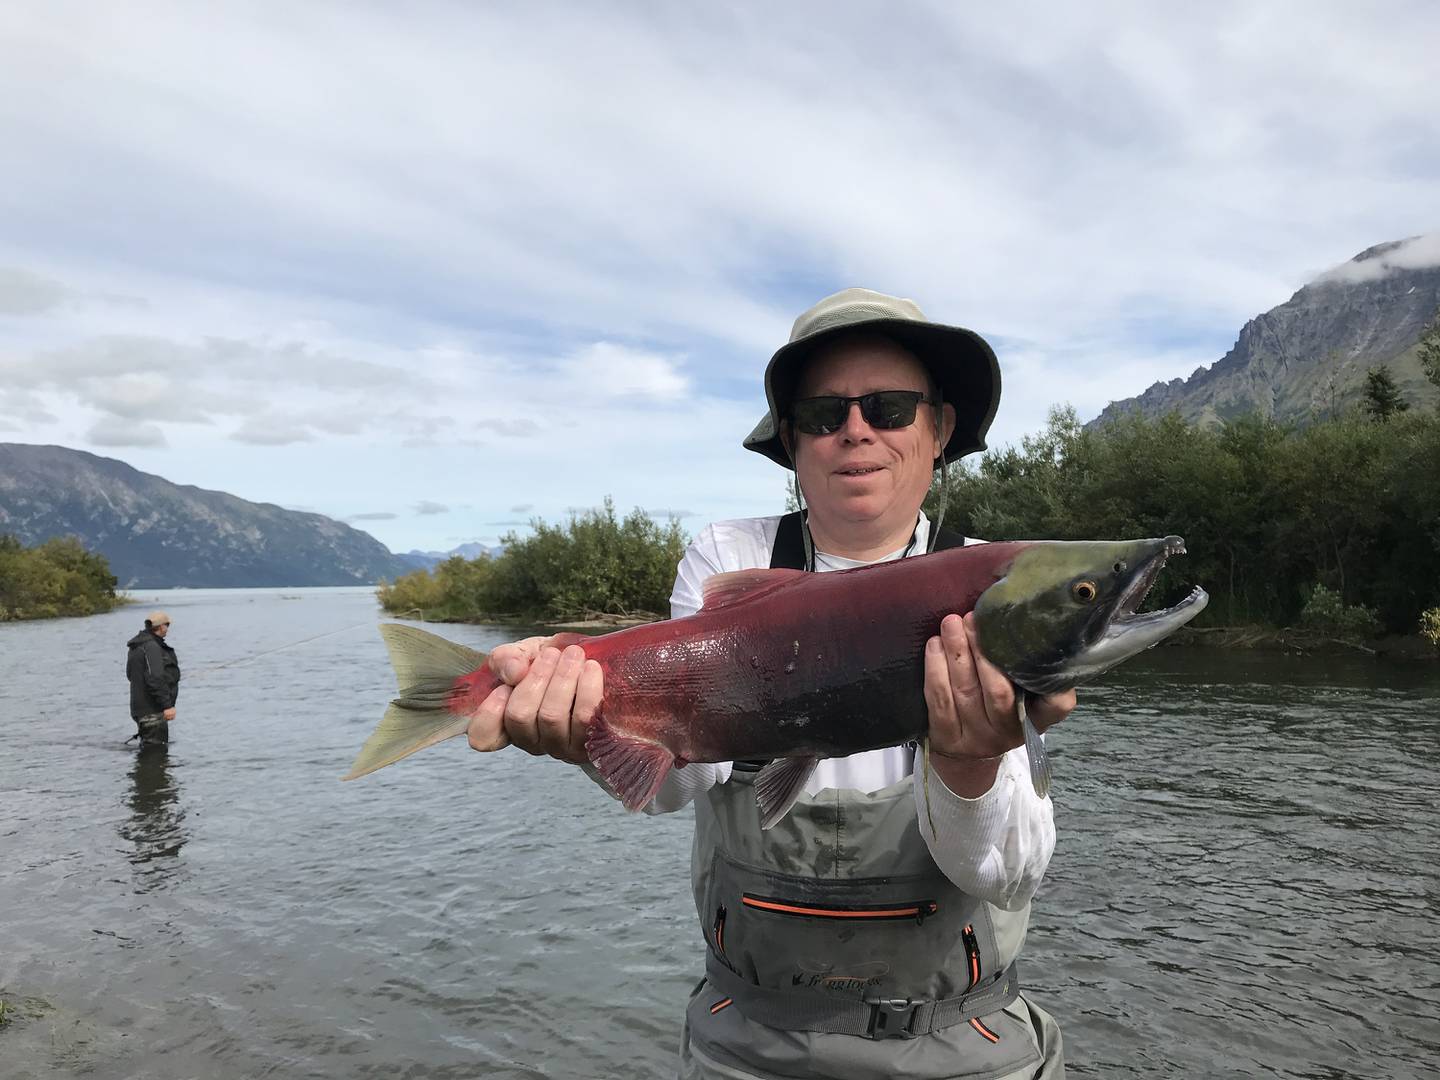 San Diegans lured to wild, remote Alaskan river for bucket-list fishing